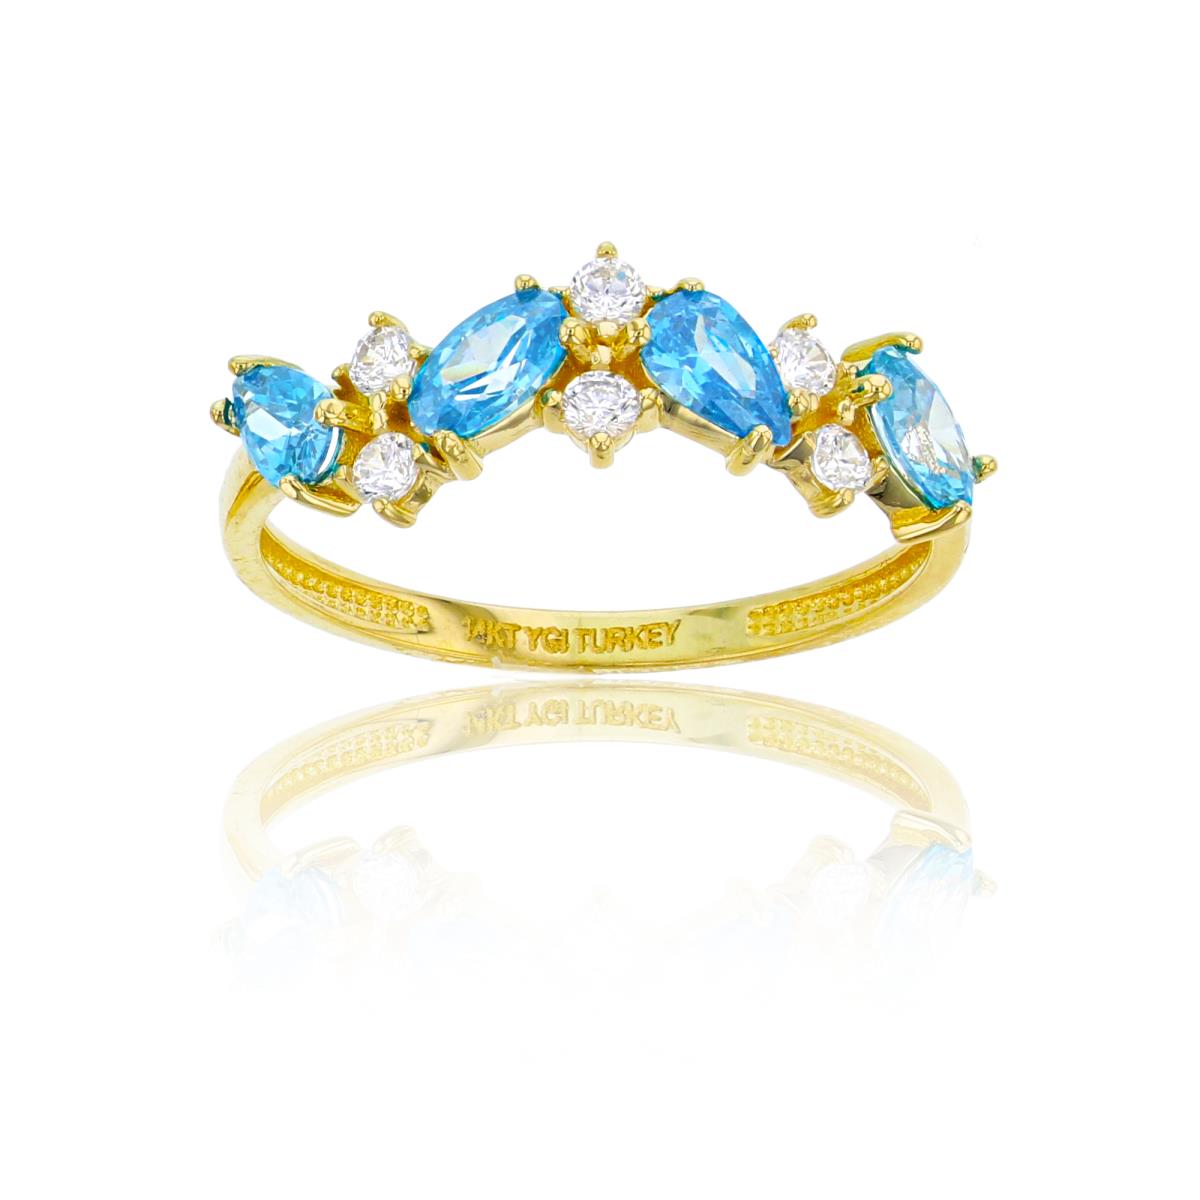 10K Yellow Gold Swiss Blue & White CZ Pear/Oval/Rd Cut Fashion Ring